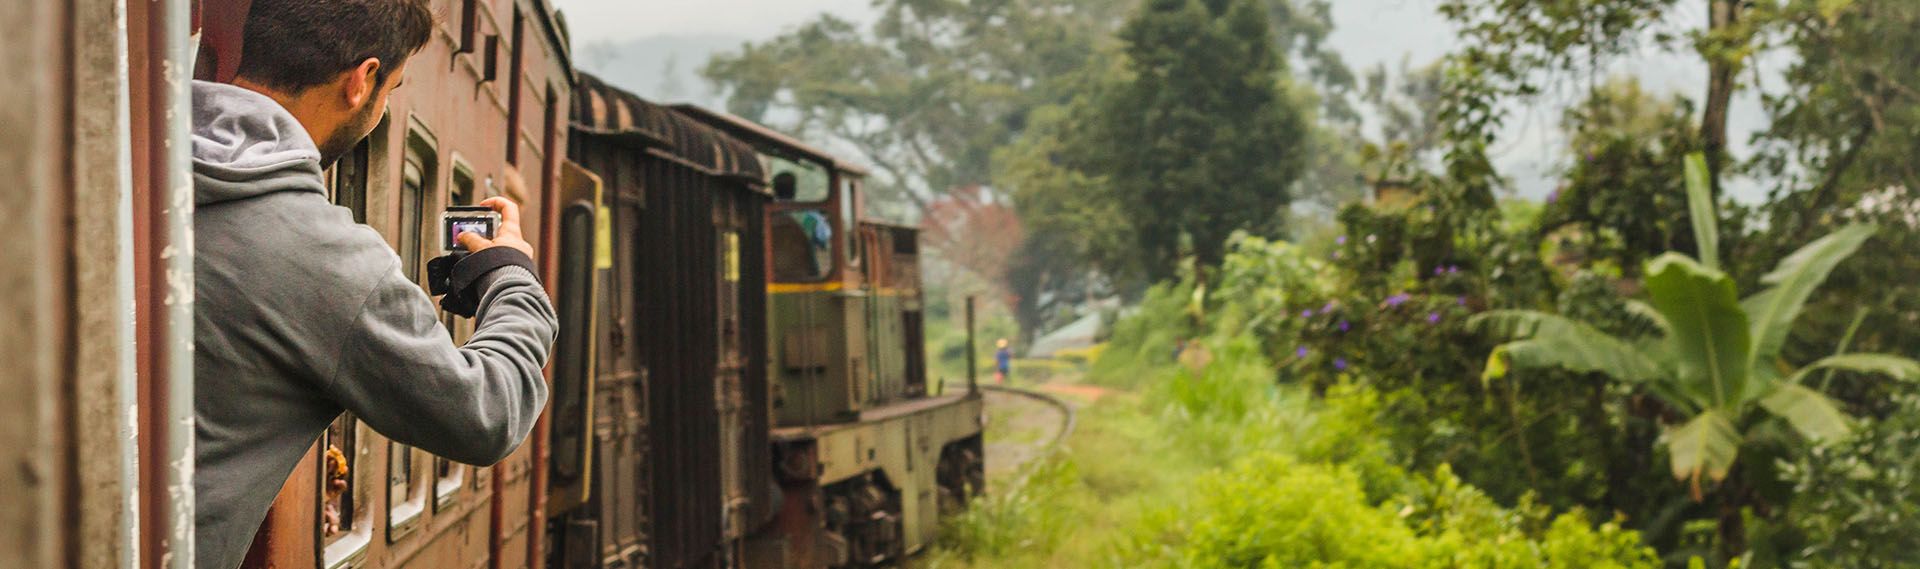 Sri Lanka, train Kandy-Ella